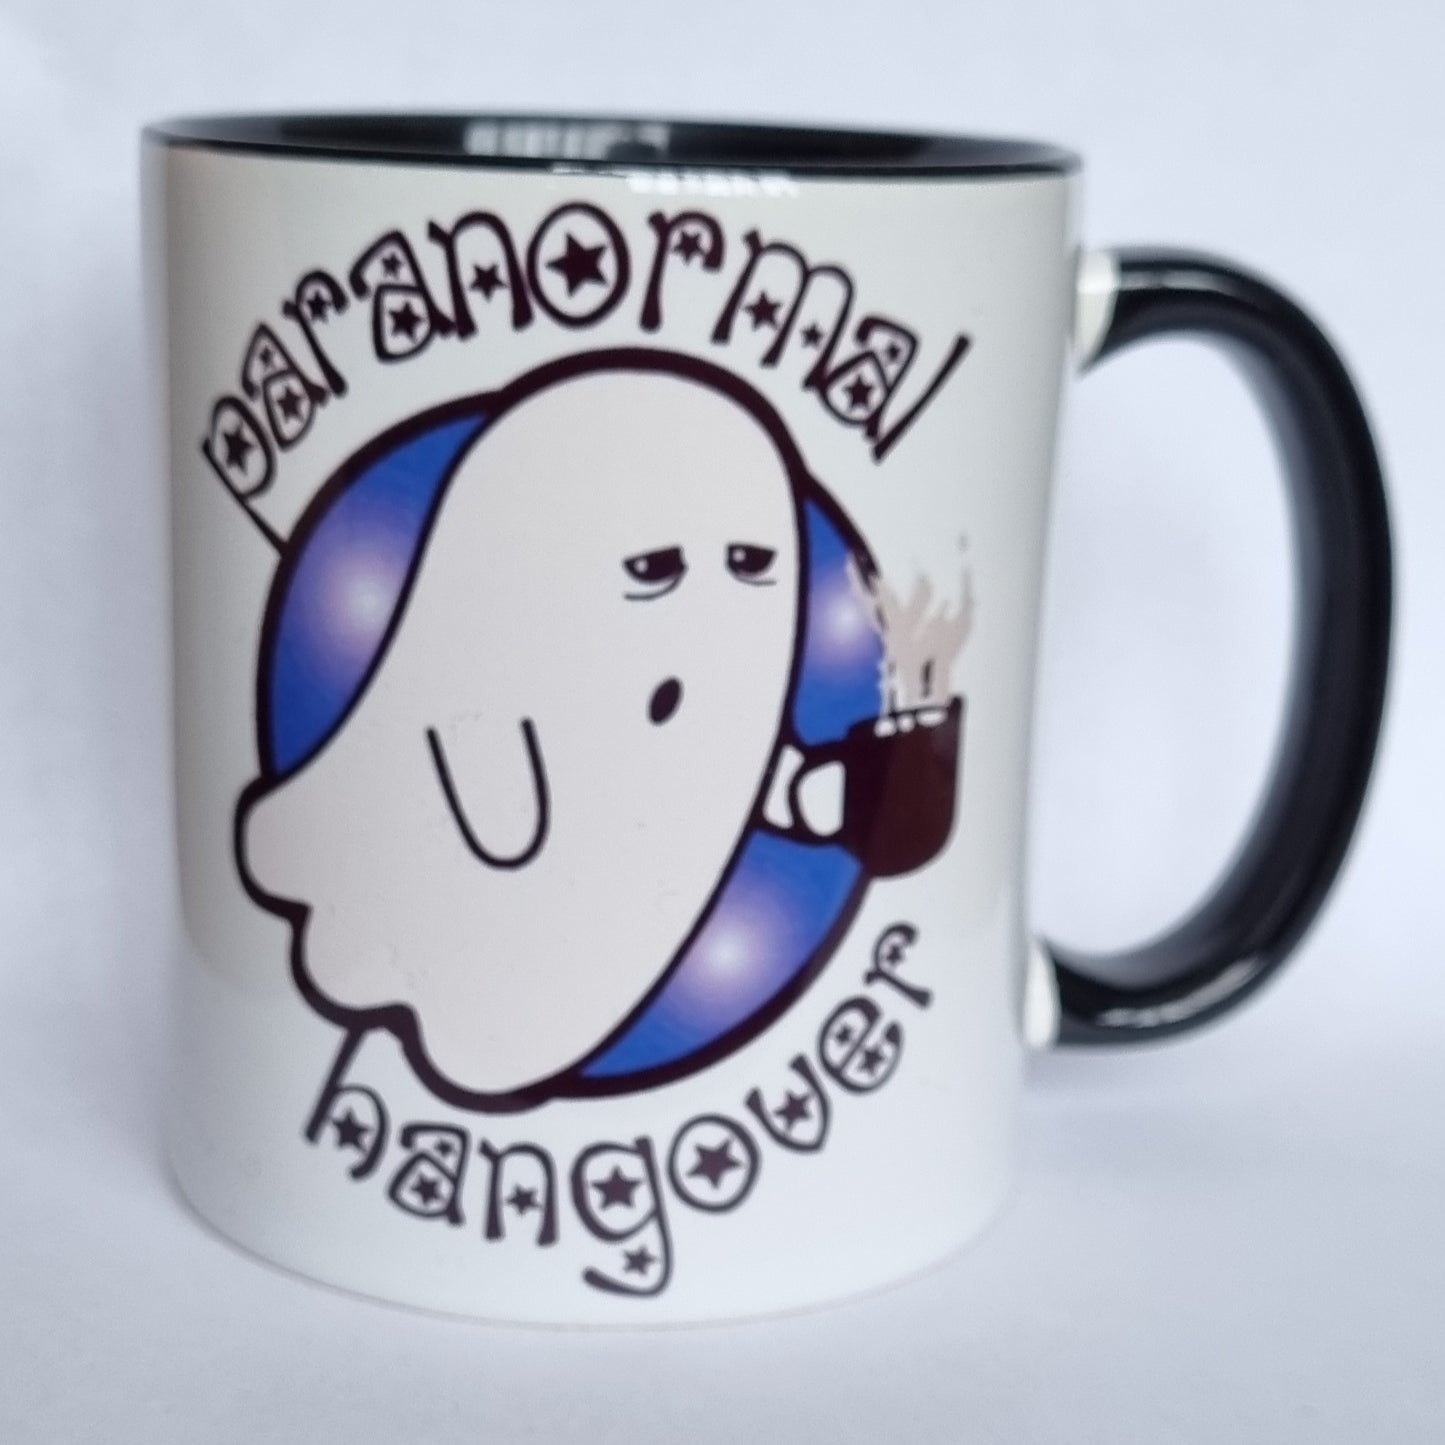 Paranormal Hangover Mug